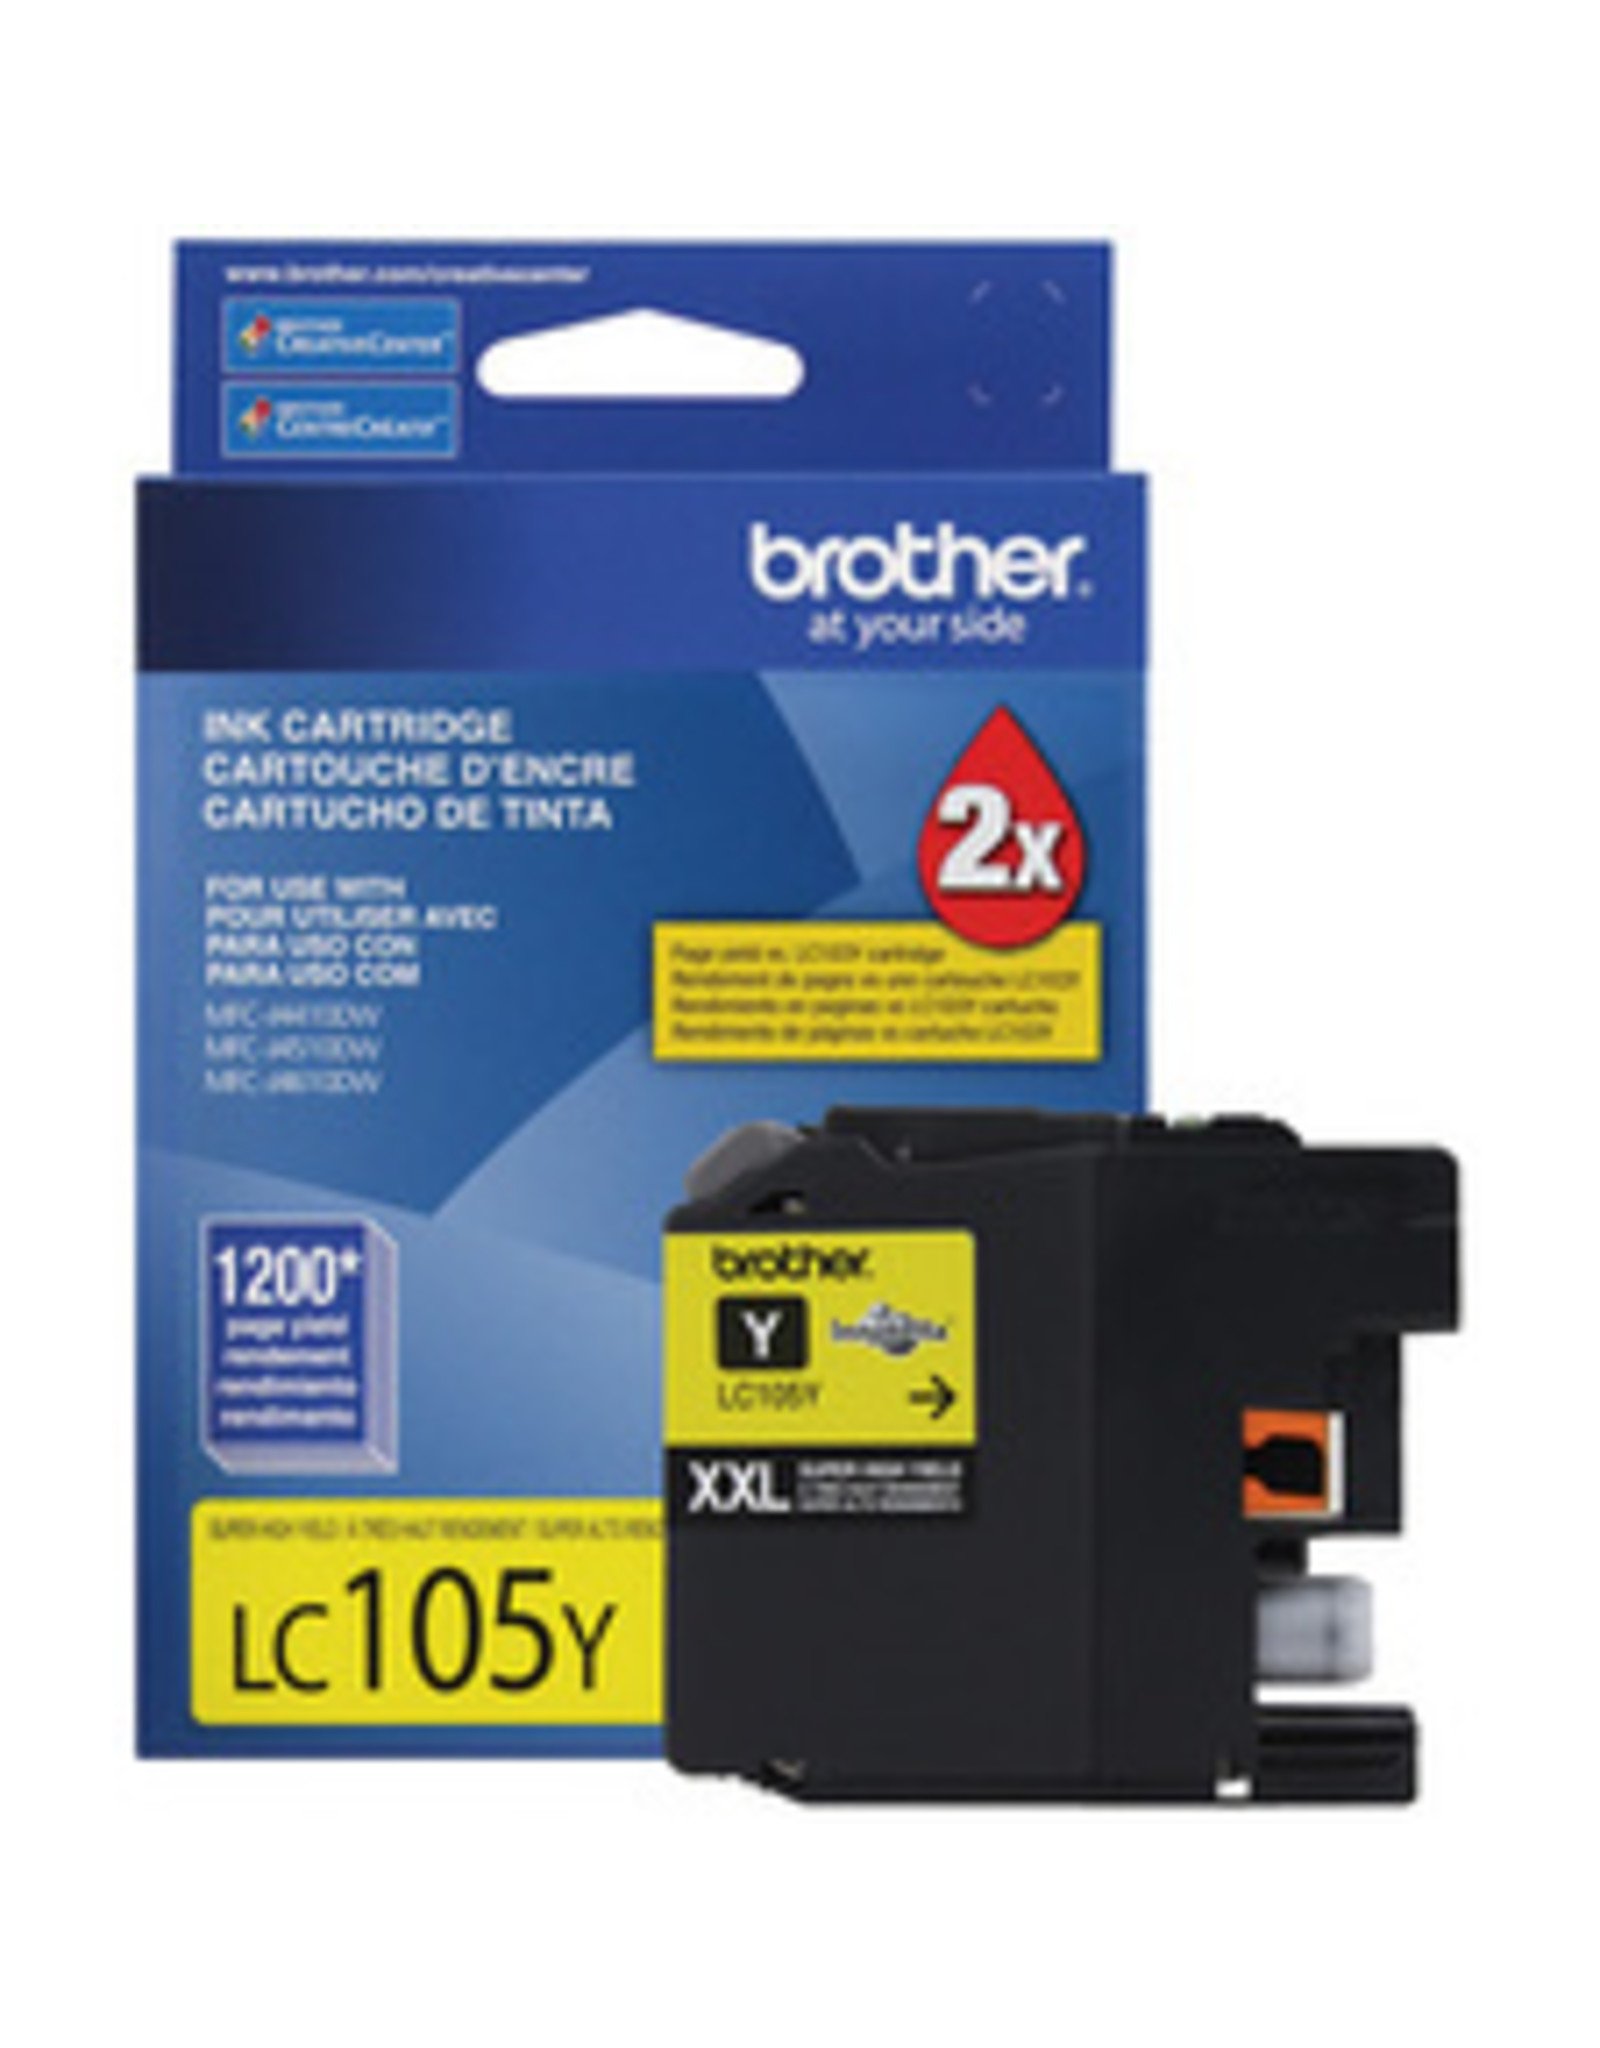 Brother Brother Innobella LC105YS Original Ink Cartridge - Yellow